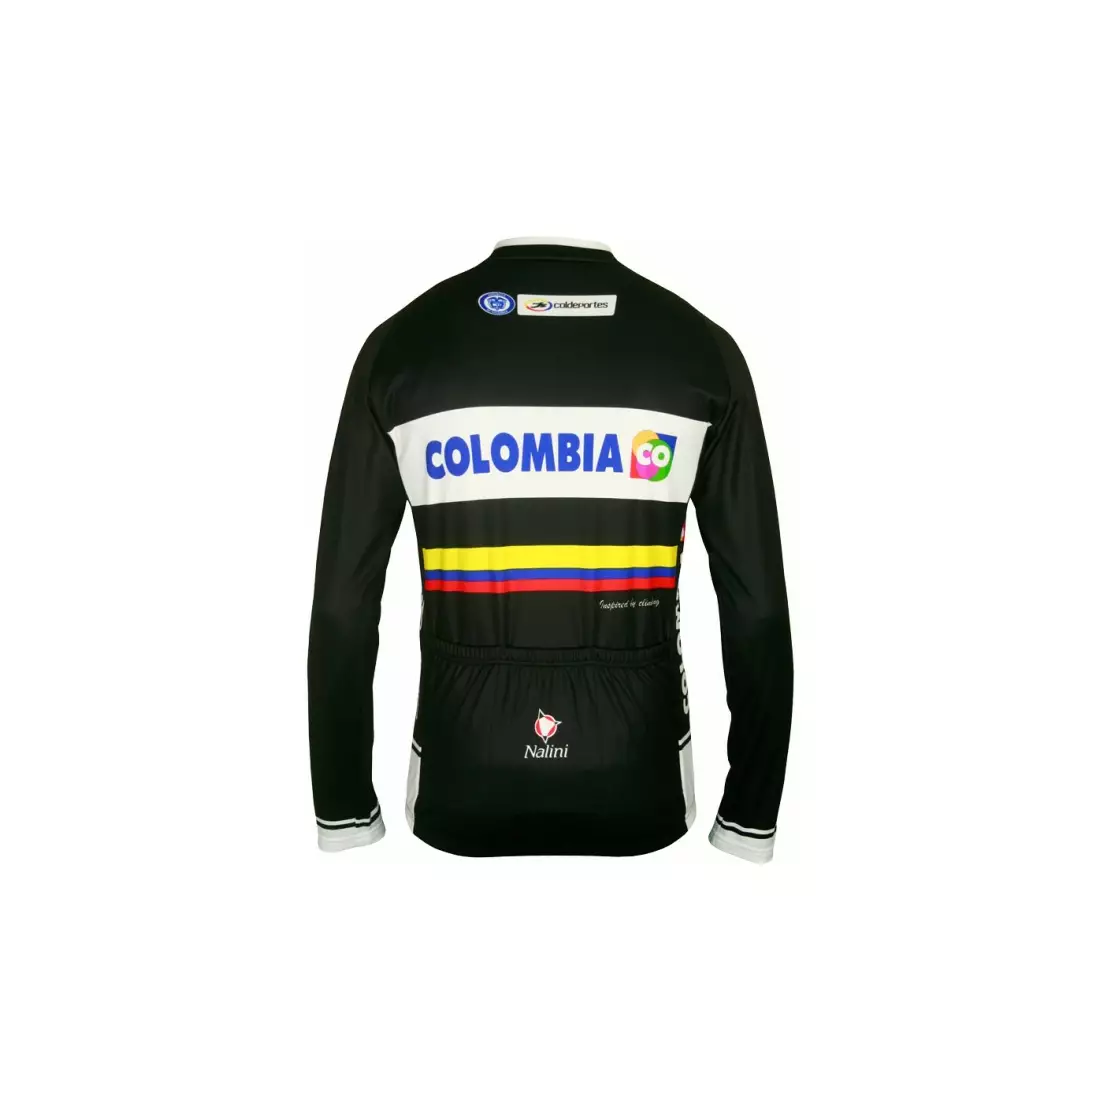 NALINI - TEAM COLOMBIA 2014 - Radsport-Sweatshirt